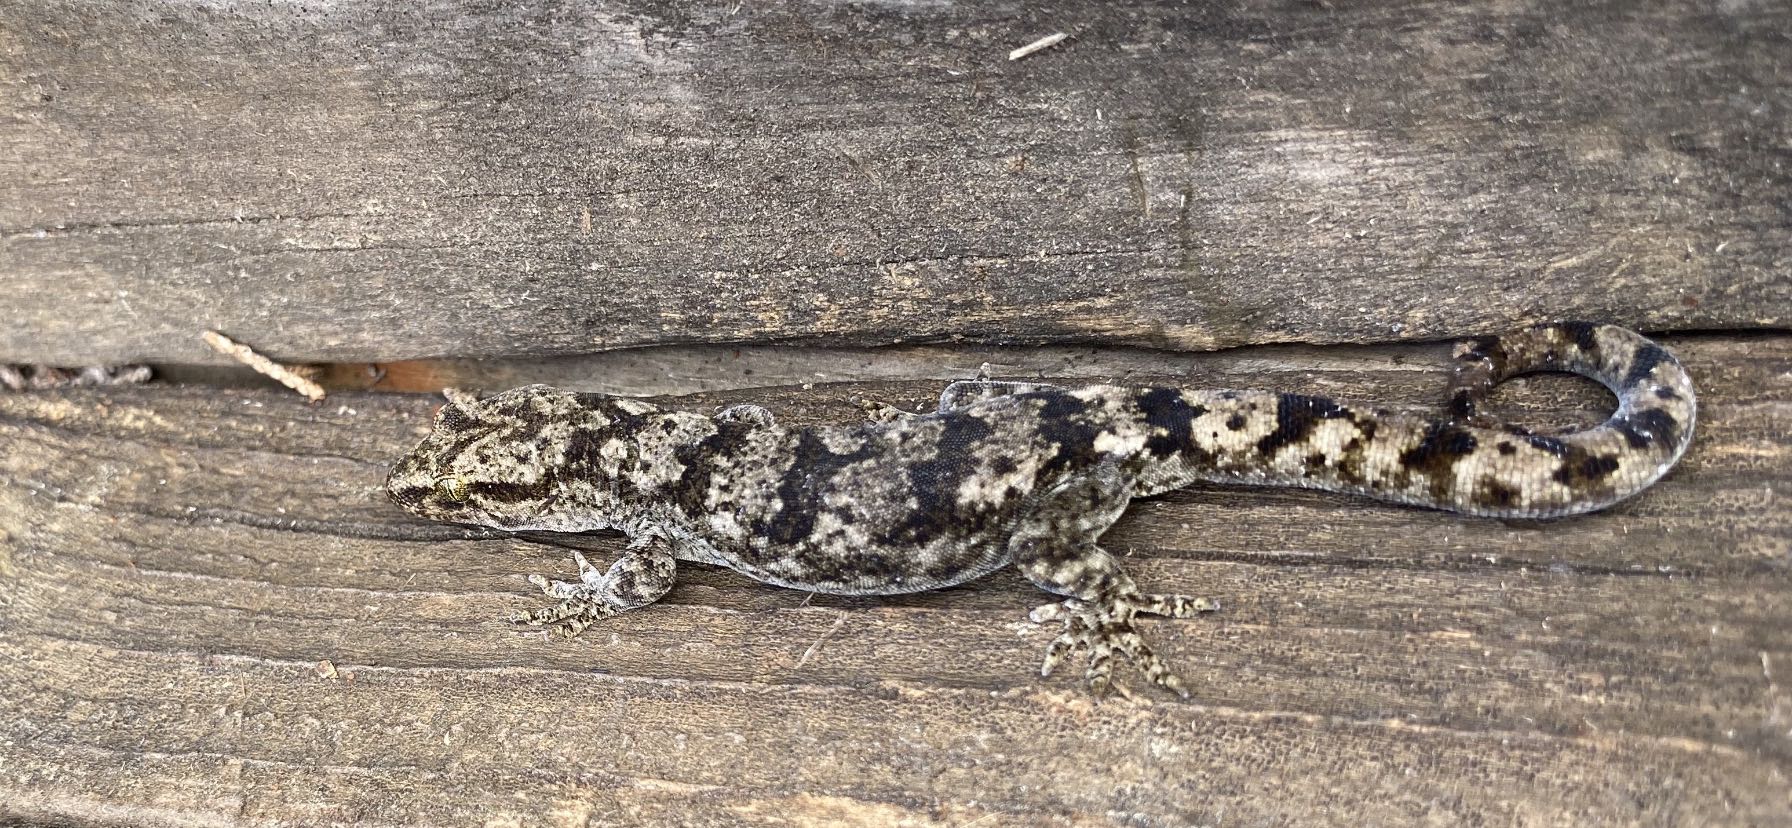 Gecko from Banks Peninsula